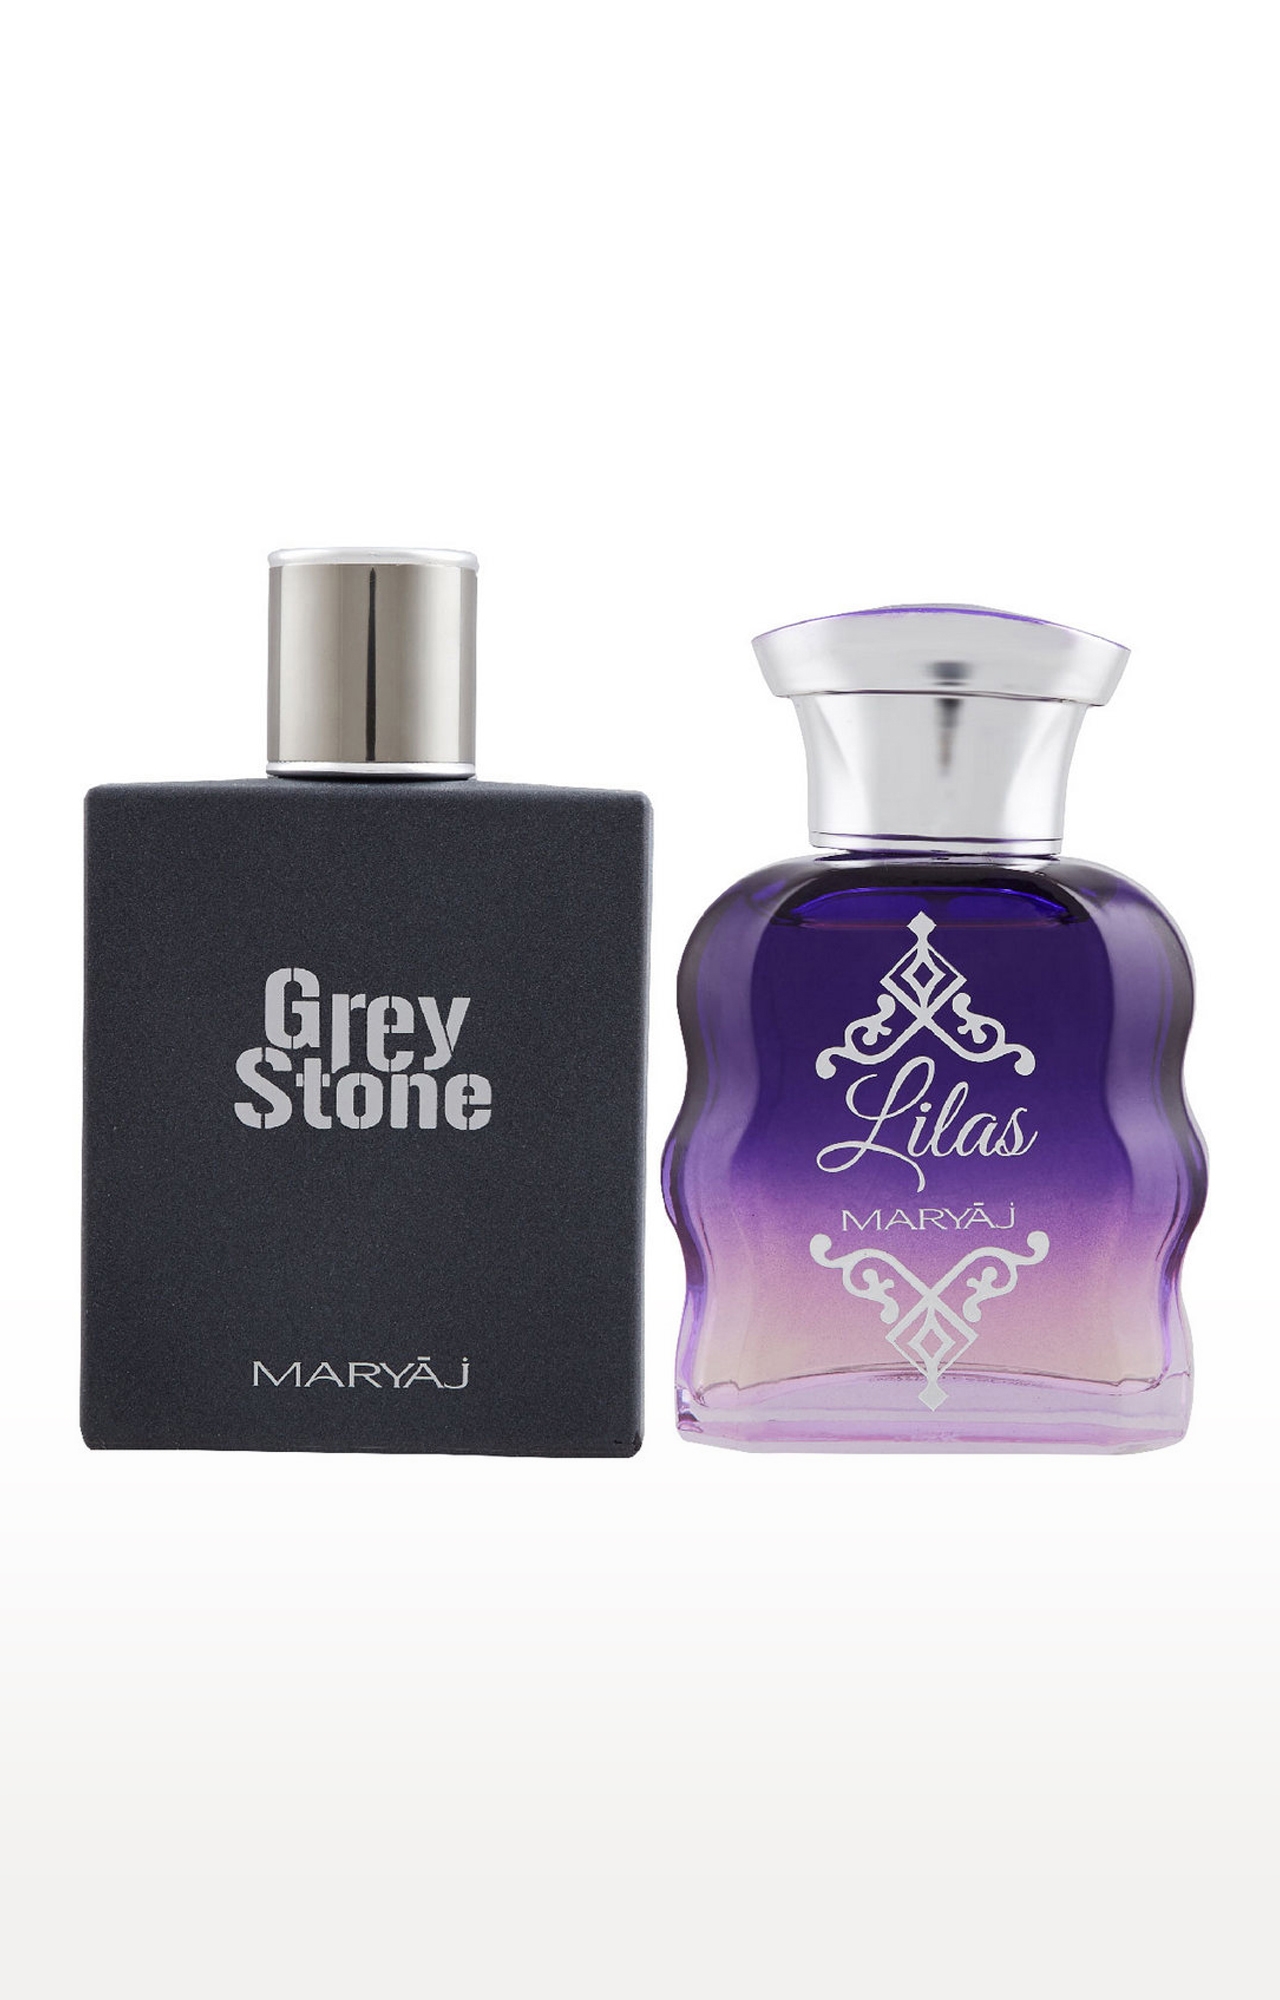 Maryaj Grey Stone Eau De Parfum Perfume 100ml for Men and Maryaj Lilas Eau De Parfum Perfume 100ml for Women